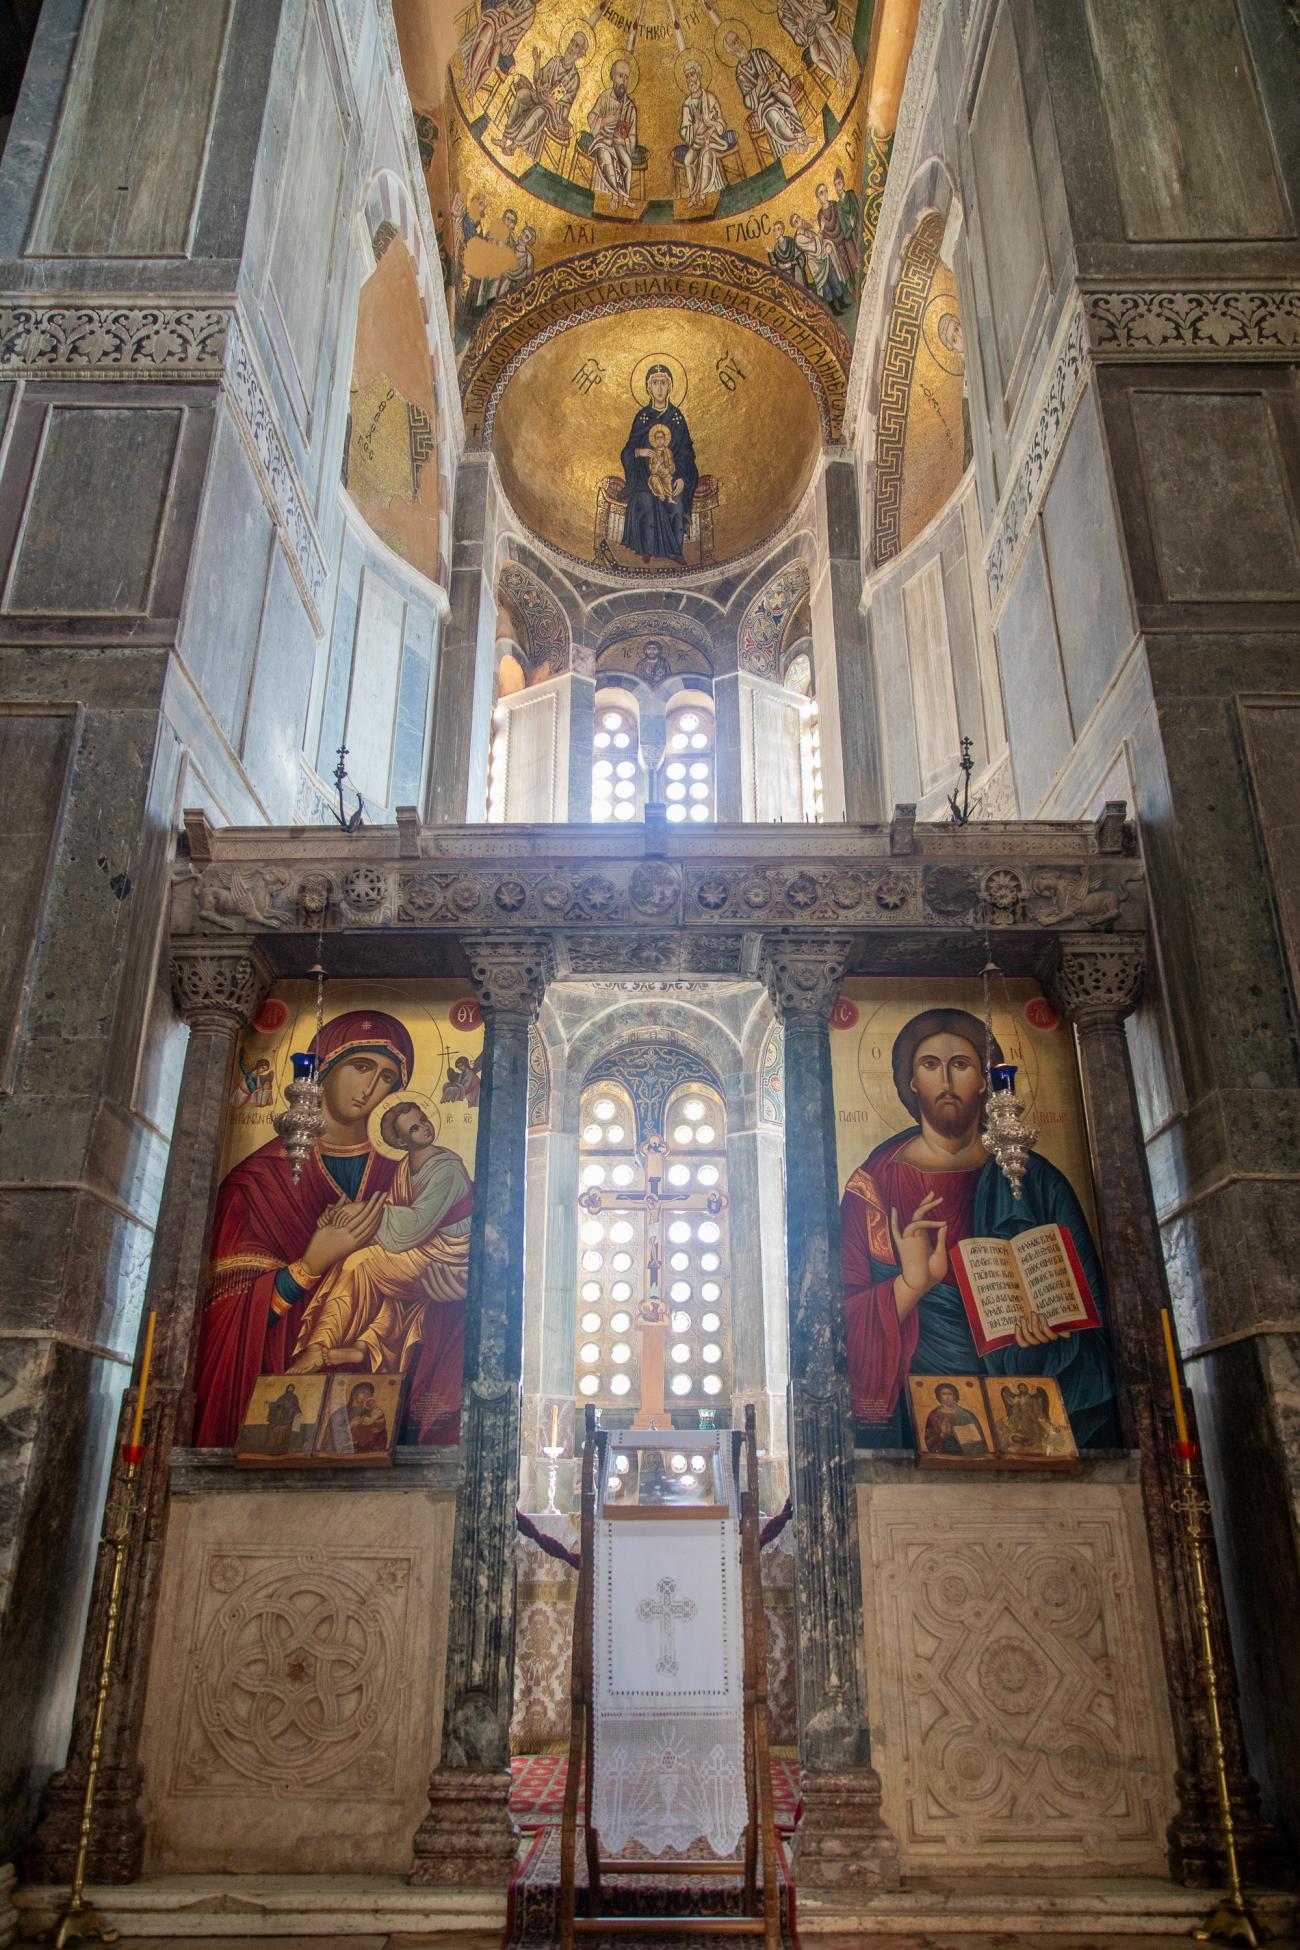 The inside of the Monastery of Hosios Loukas